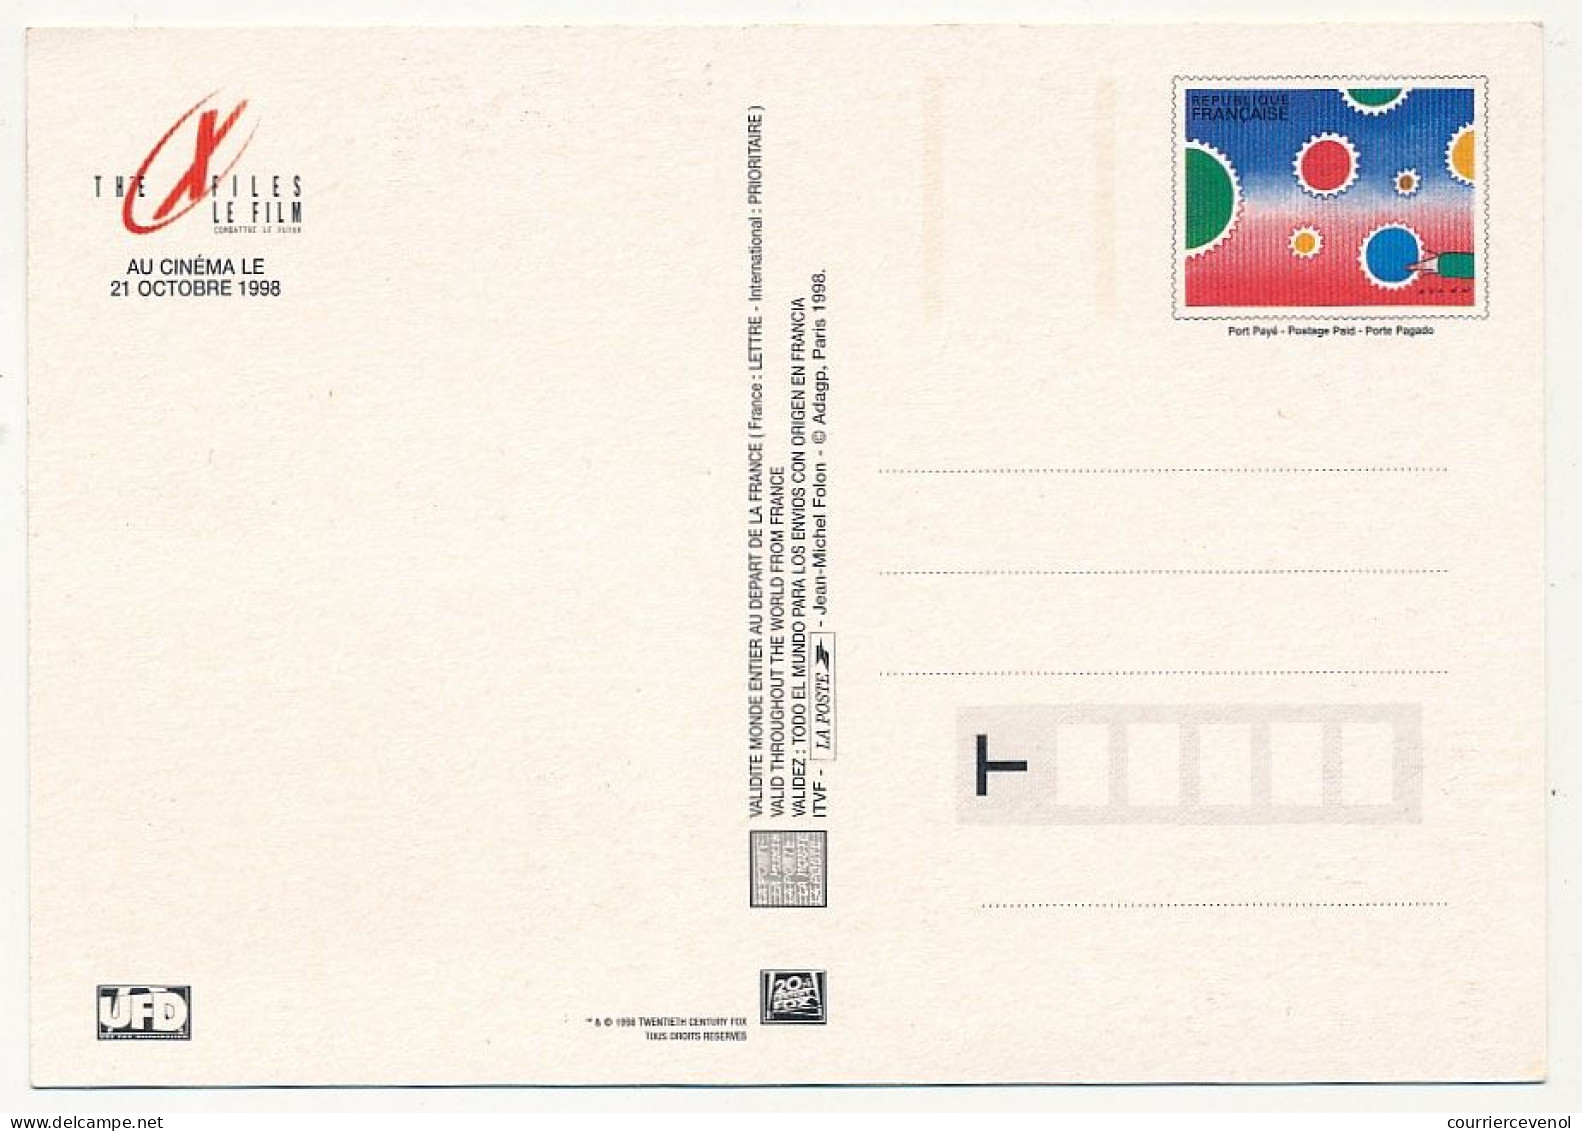 4 Cartes Postales PAP - The X Files, Le Film - Cartes Postales Neuves - Standard Postcards & Stamped On Demand (before 1995)